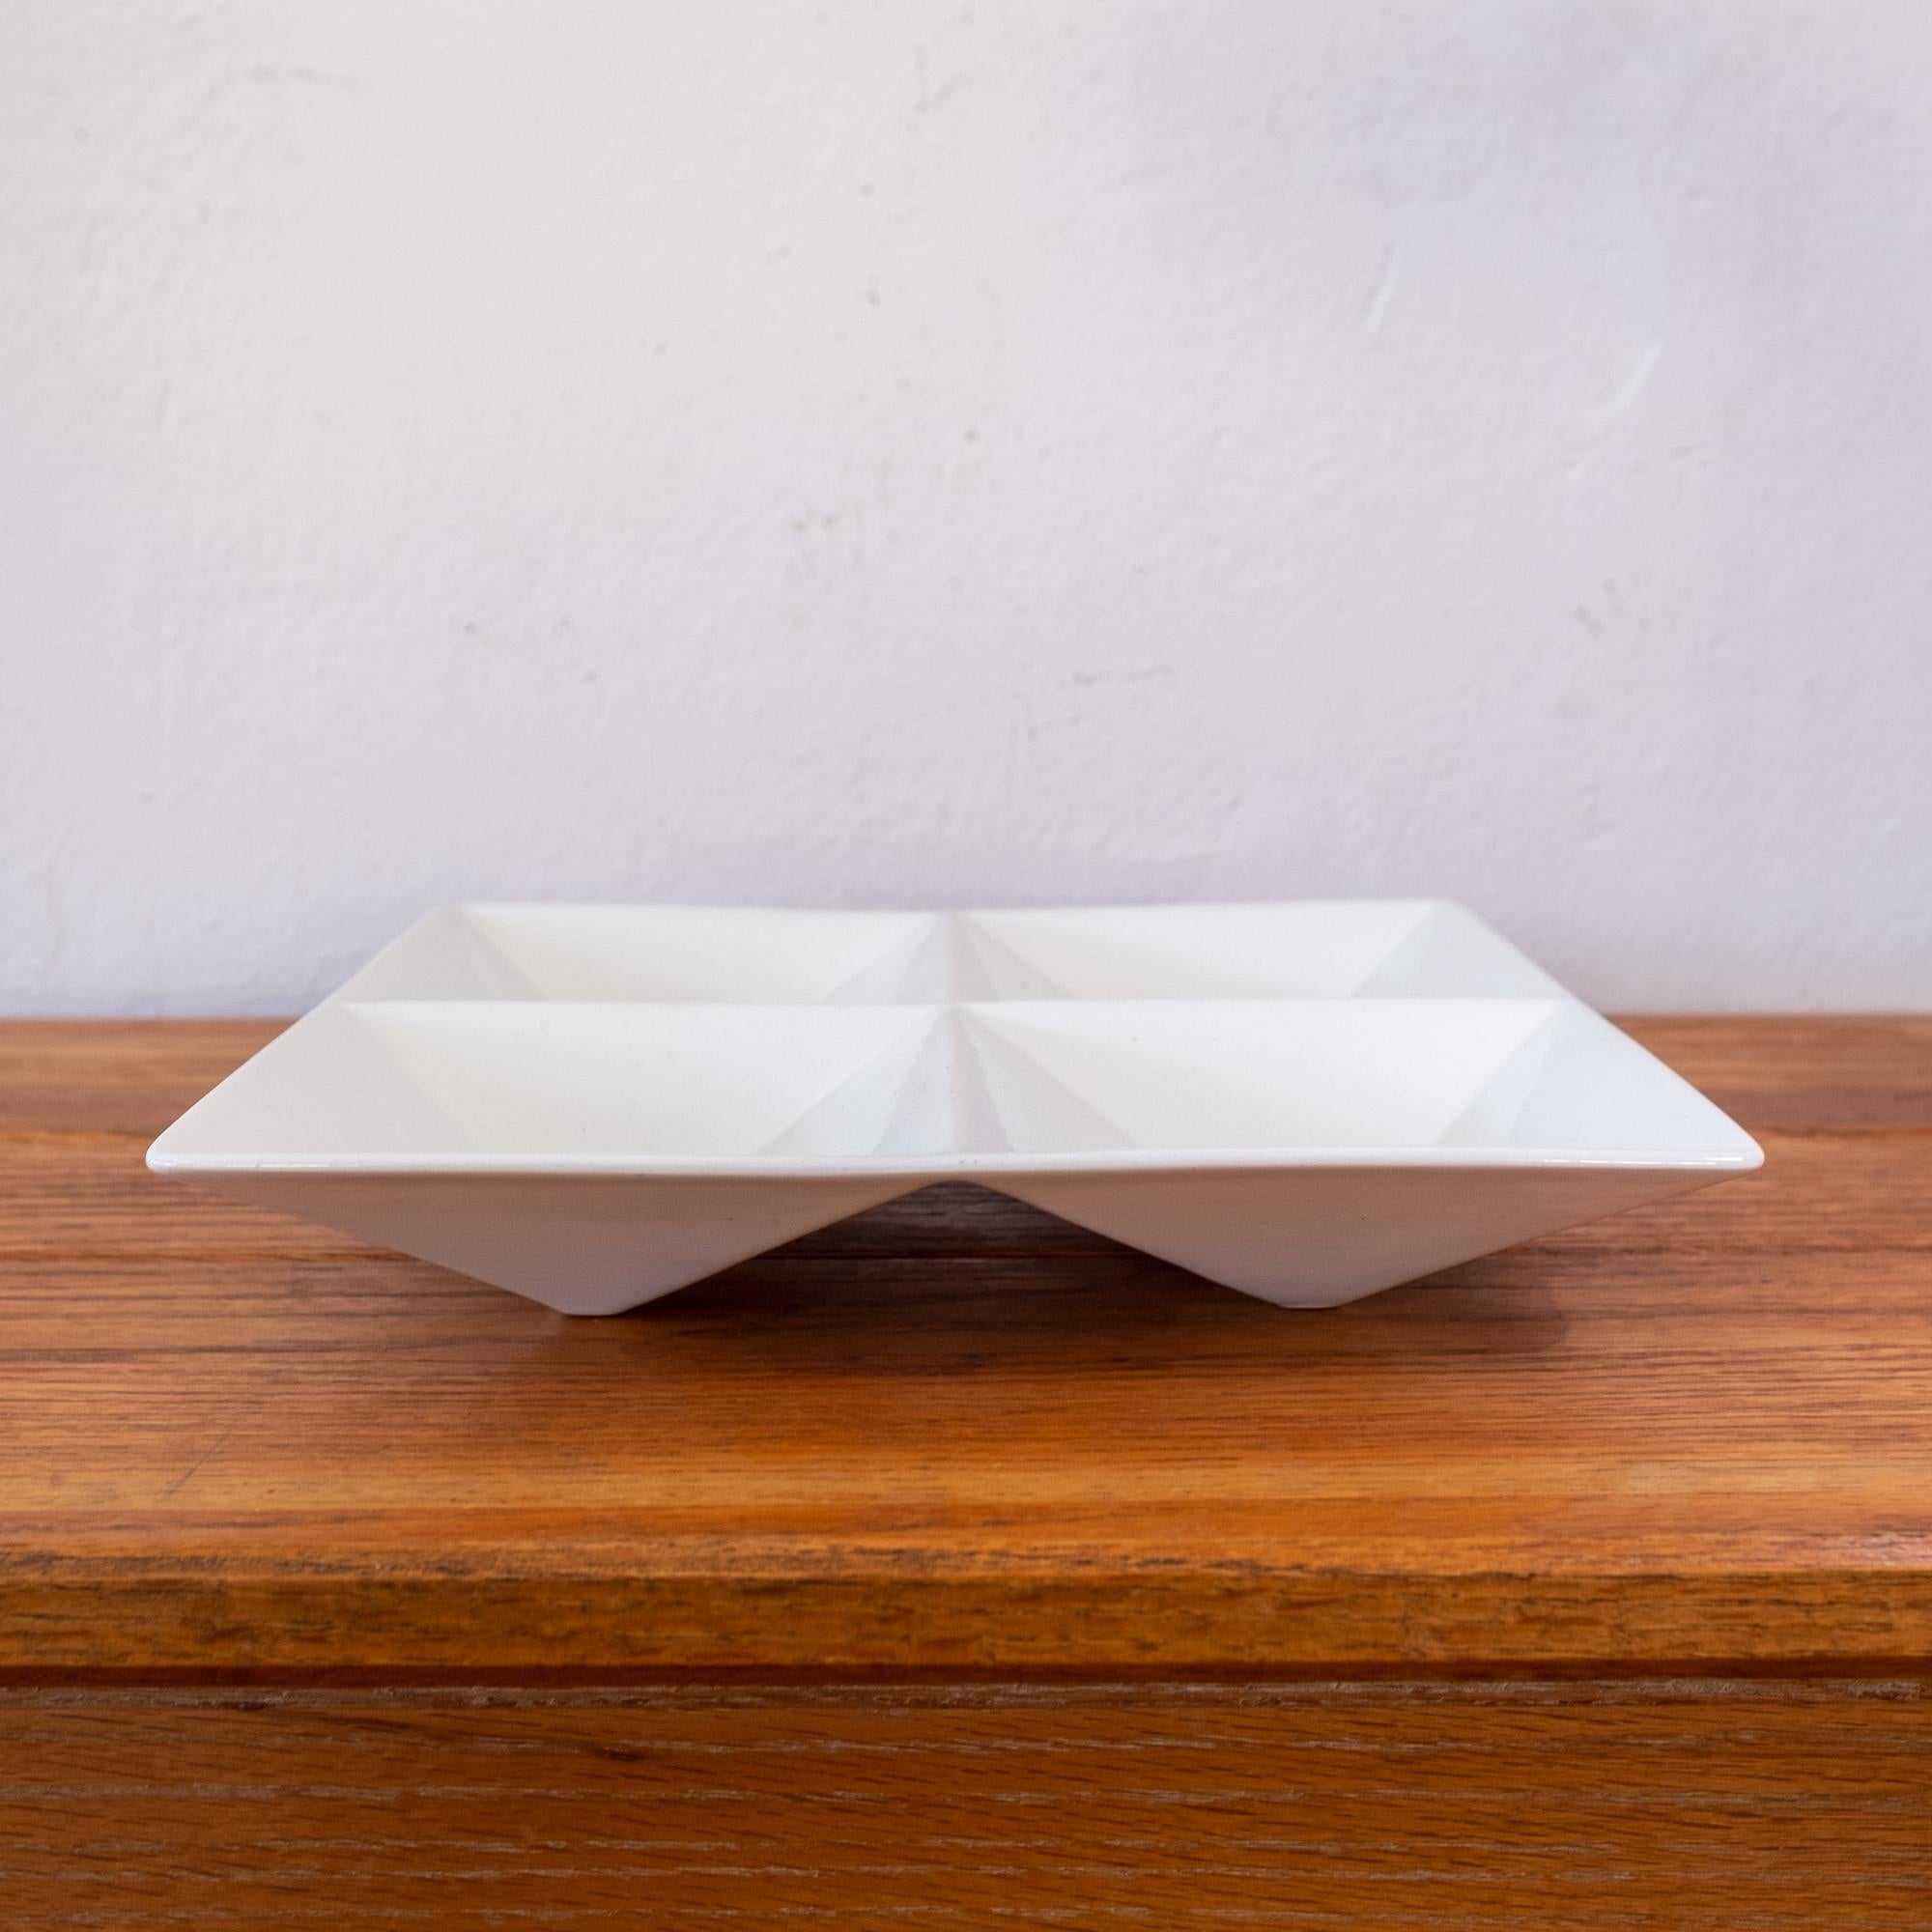 Geometric divided ceramic tray with glossy by Kaj Franck for Arabia. Early production, Finland, 1960.